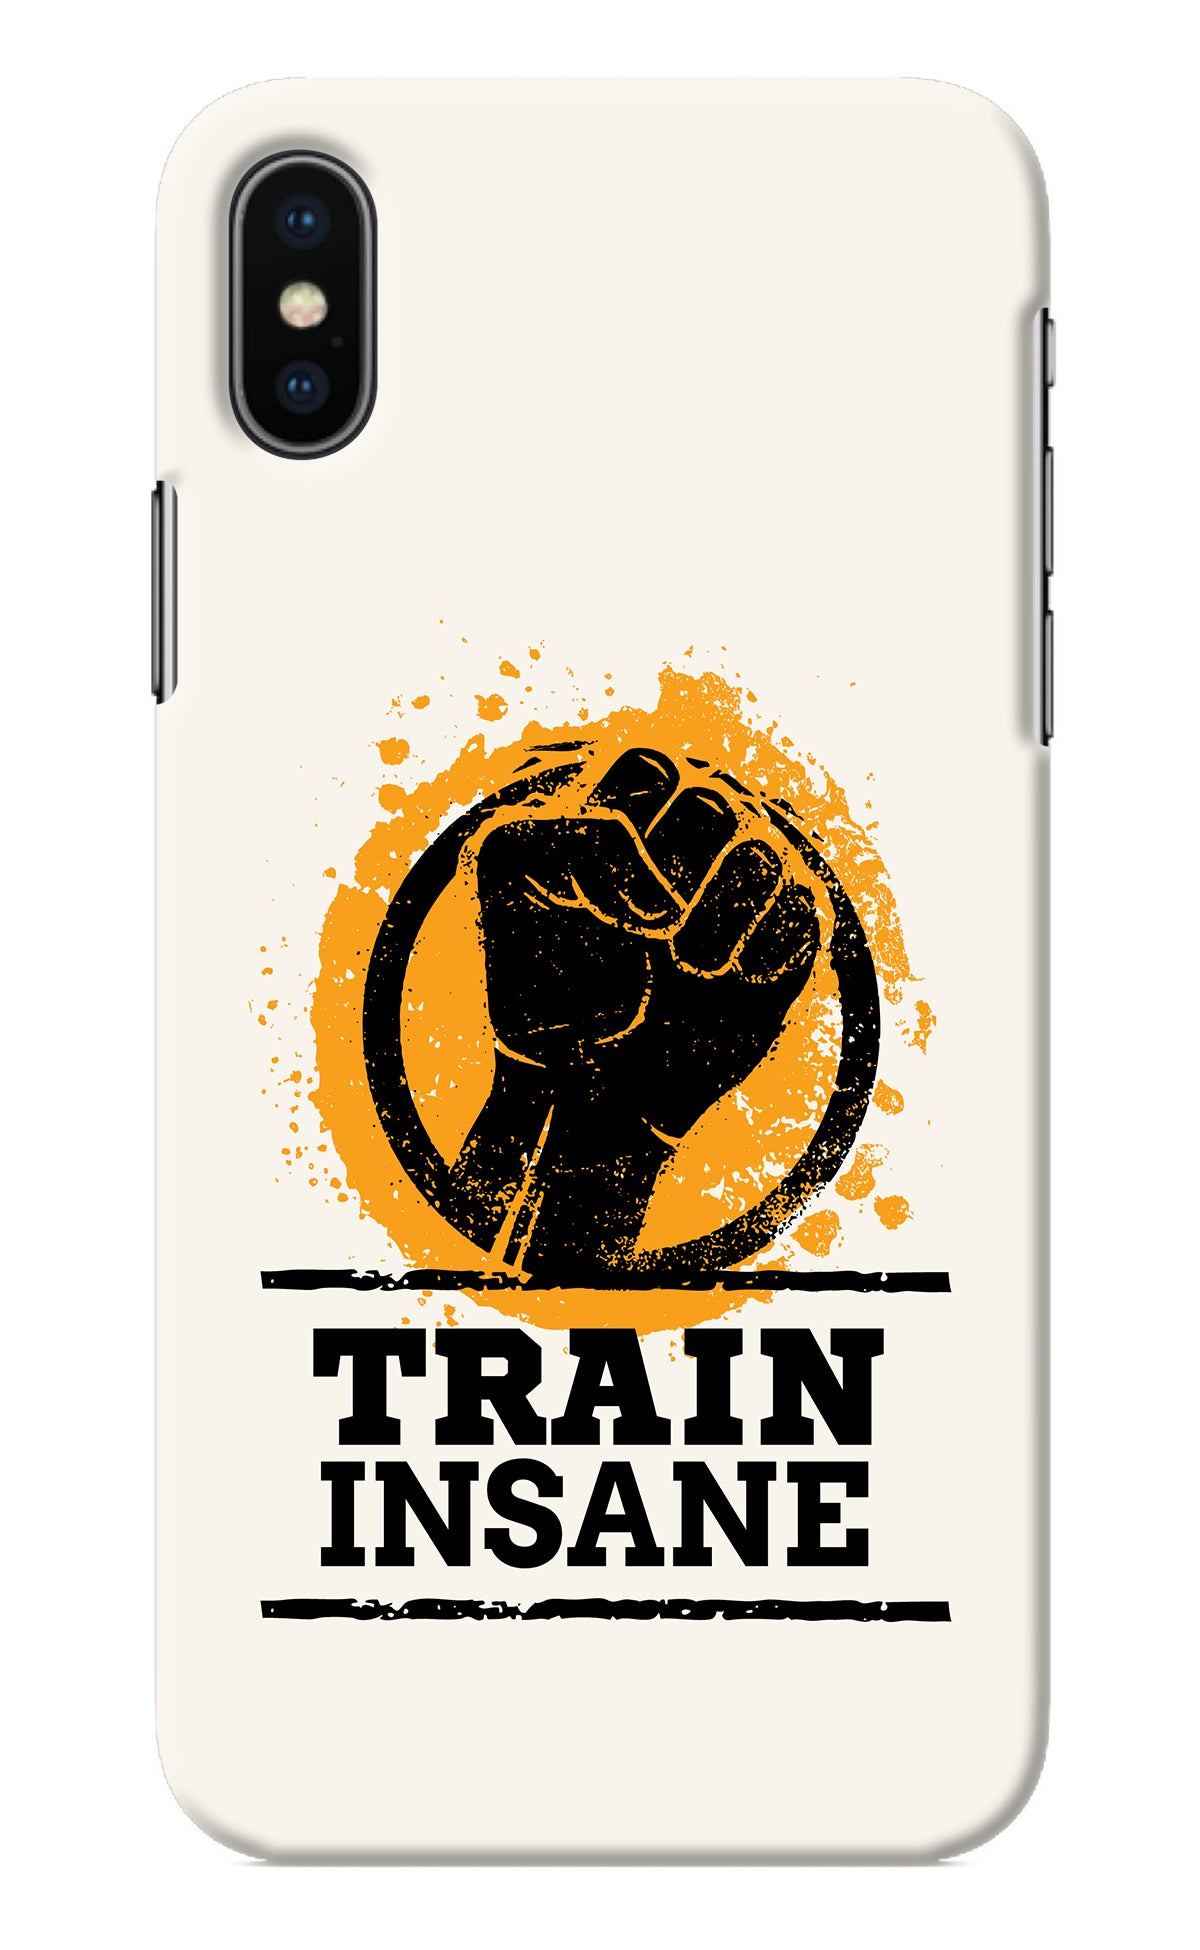 Train Insane iPhone X Back Cover